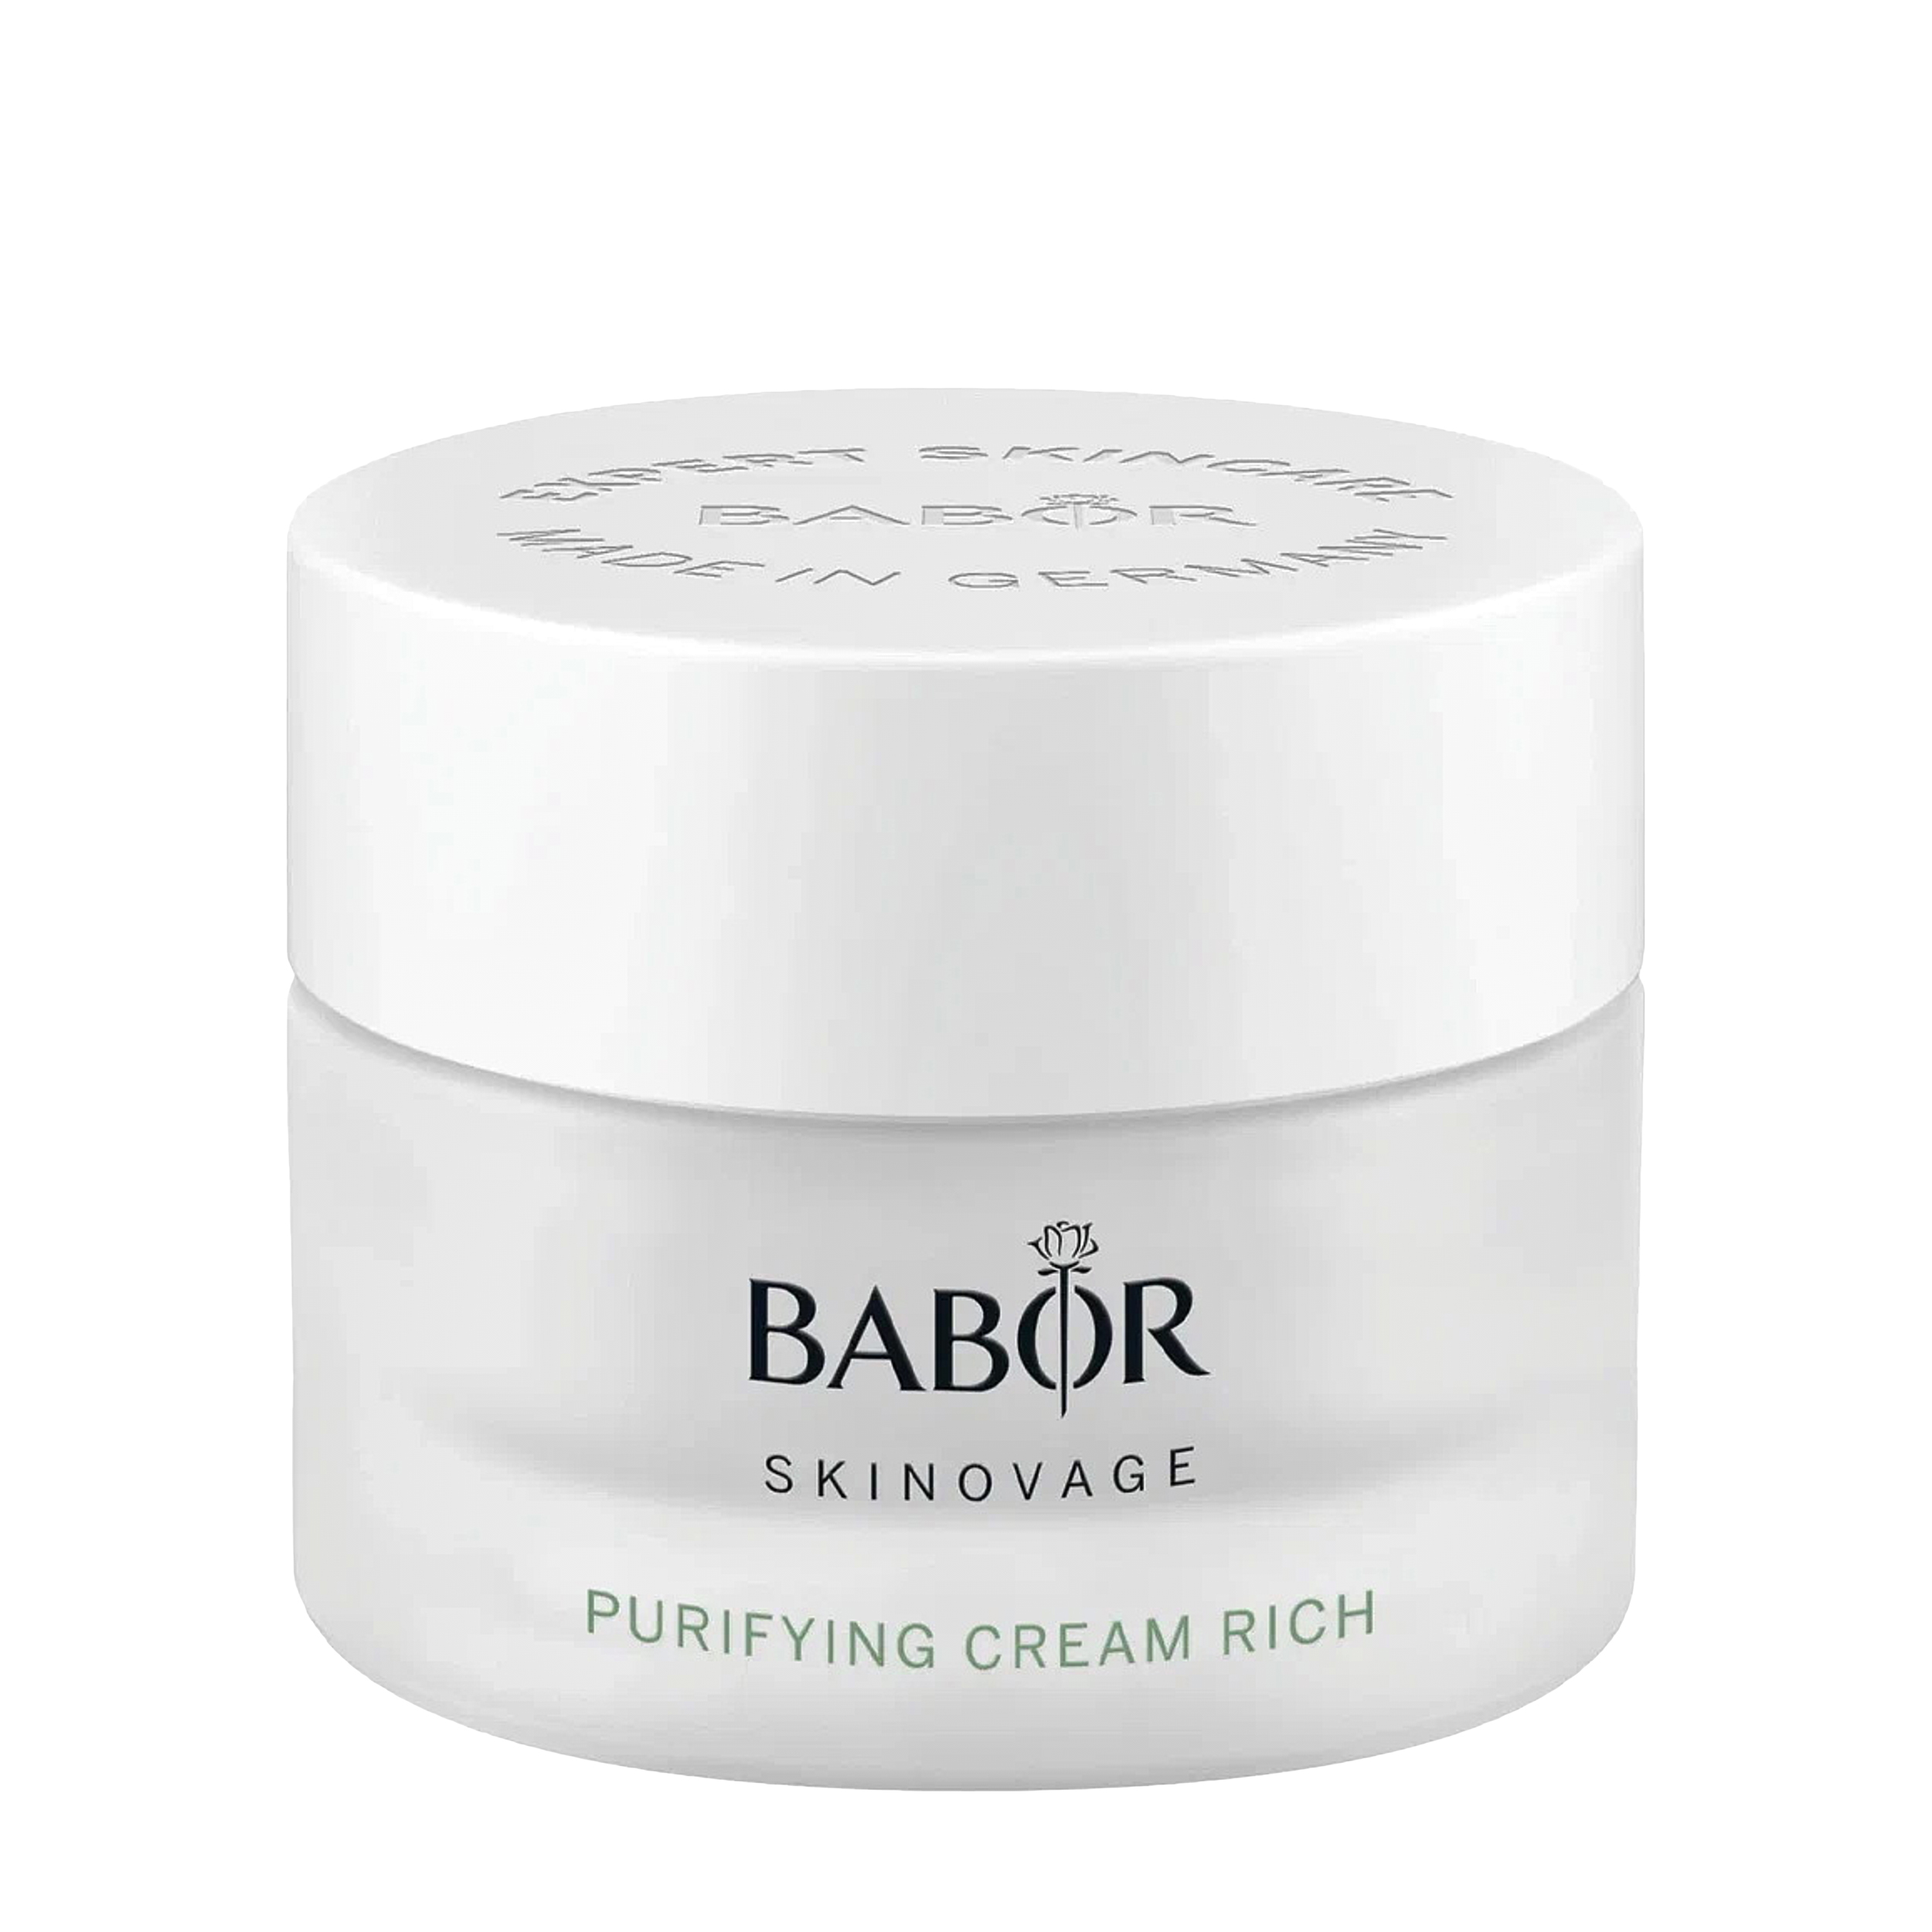 Babor Babor Насыщенный крем для проблемной кожи лица Skinovage Purifying Cream Rich 50 мл 4.012.42 - фото 1